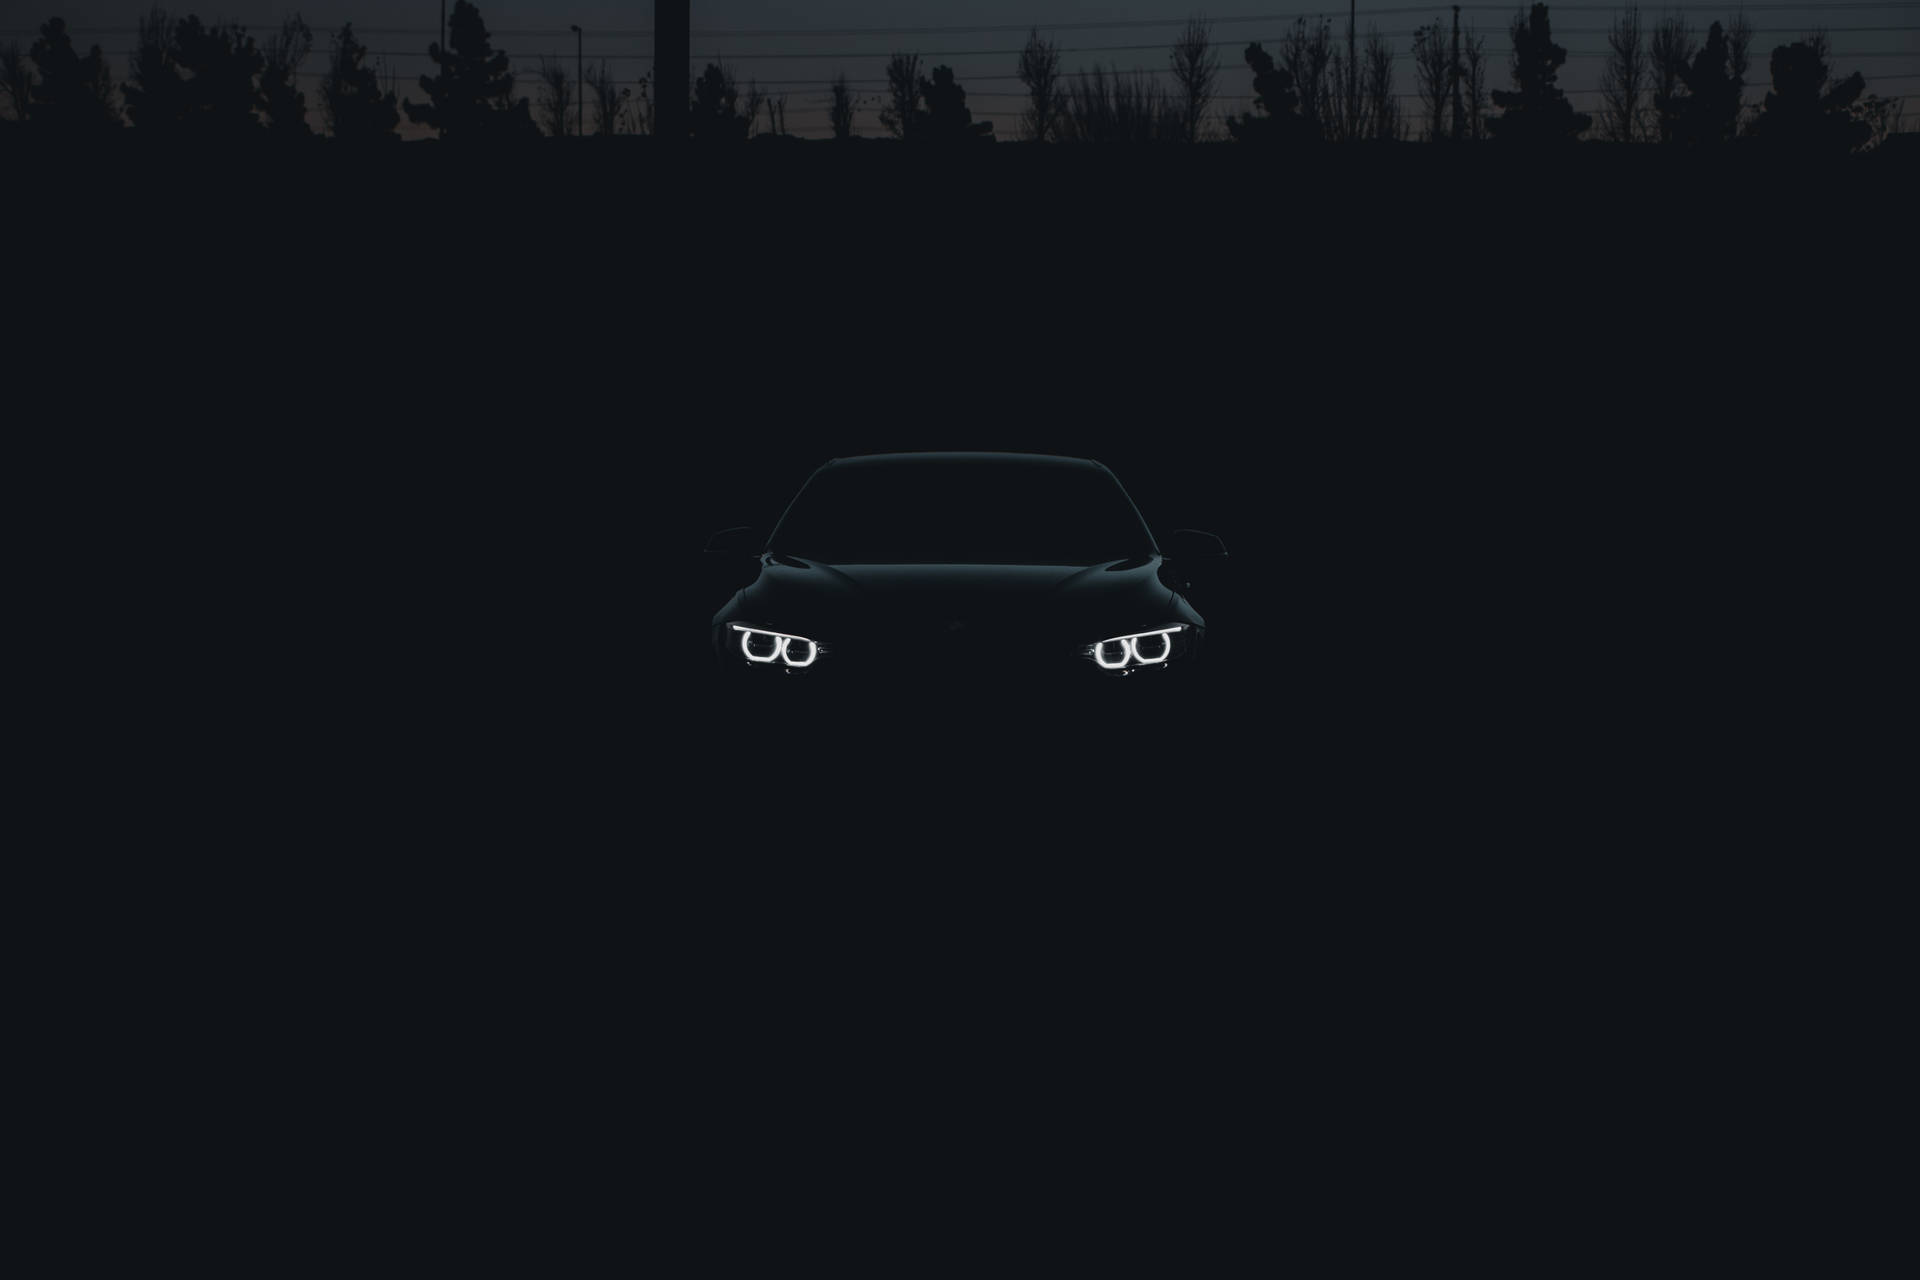 Black Bmw Car In The Shadows Background